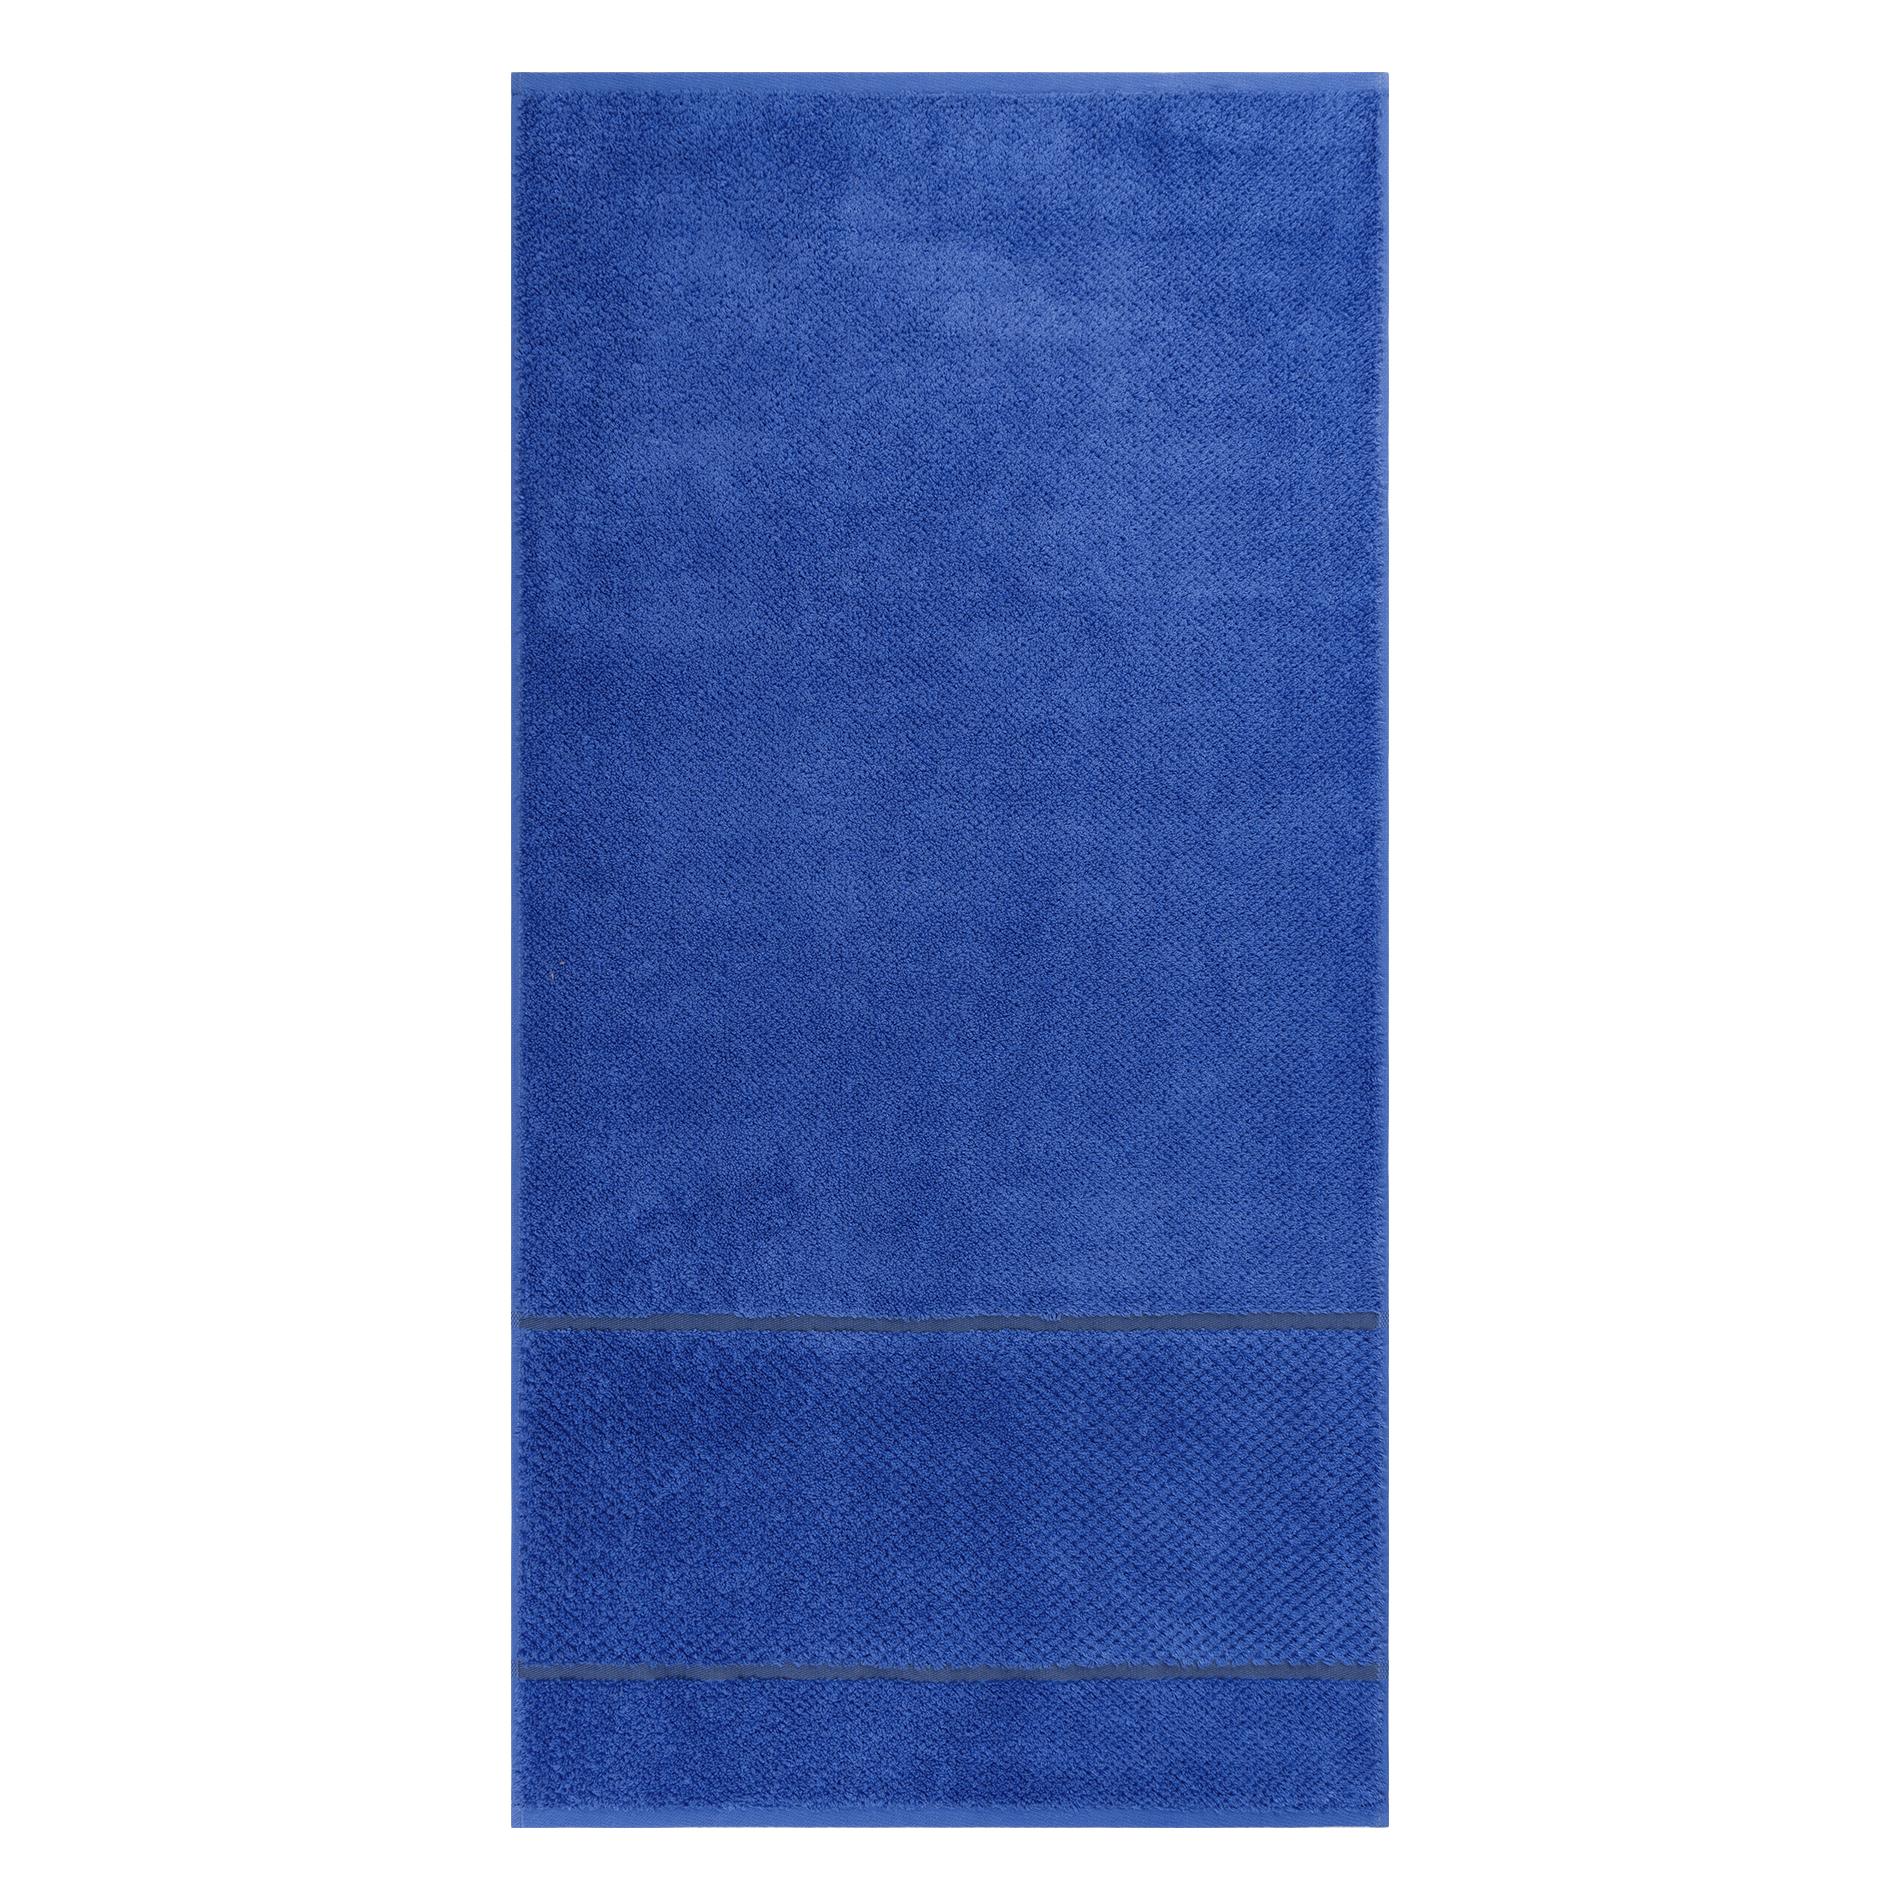 Махровое полотенце Cleanelly Fiordaliso синее 50х100 см полотенце махровое lowly 50х100 см голубой хлопок